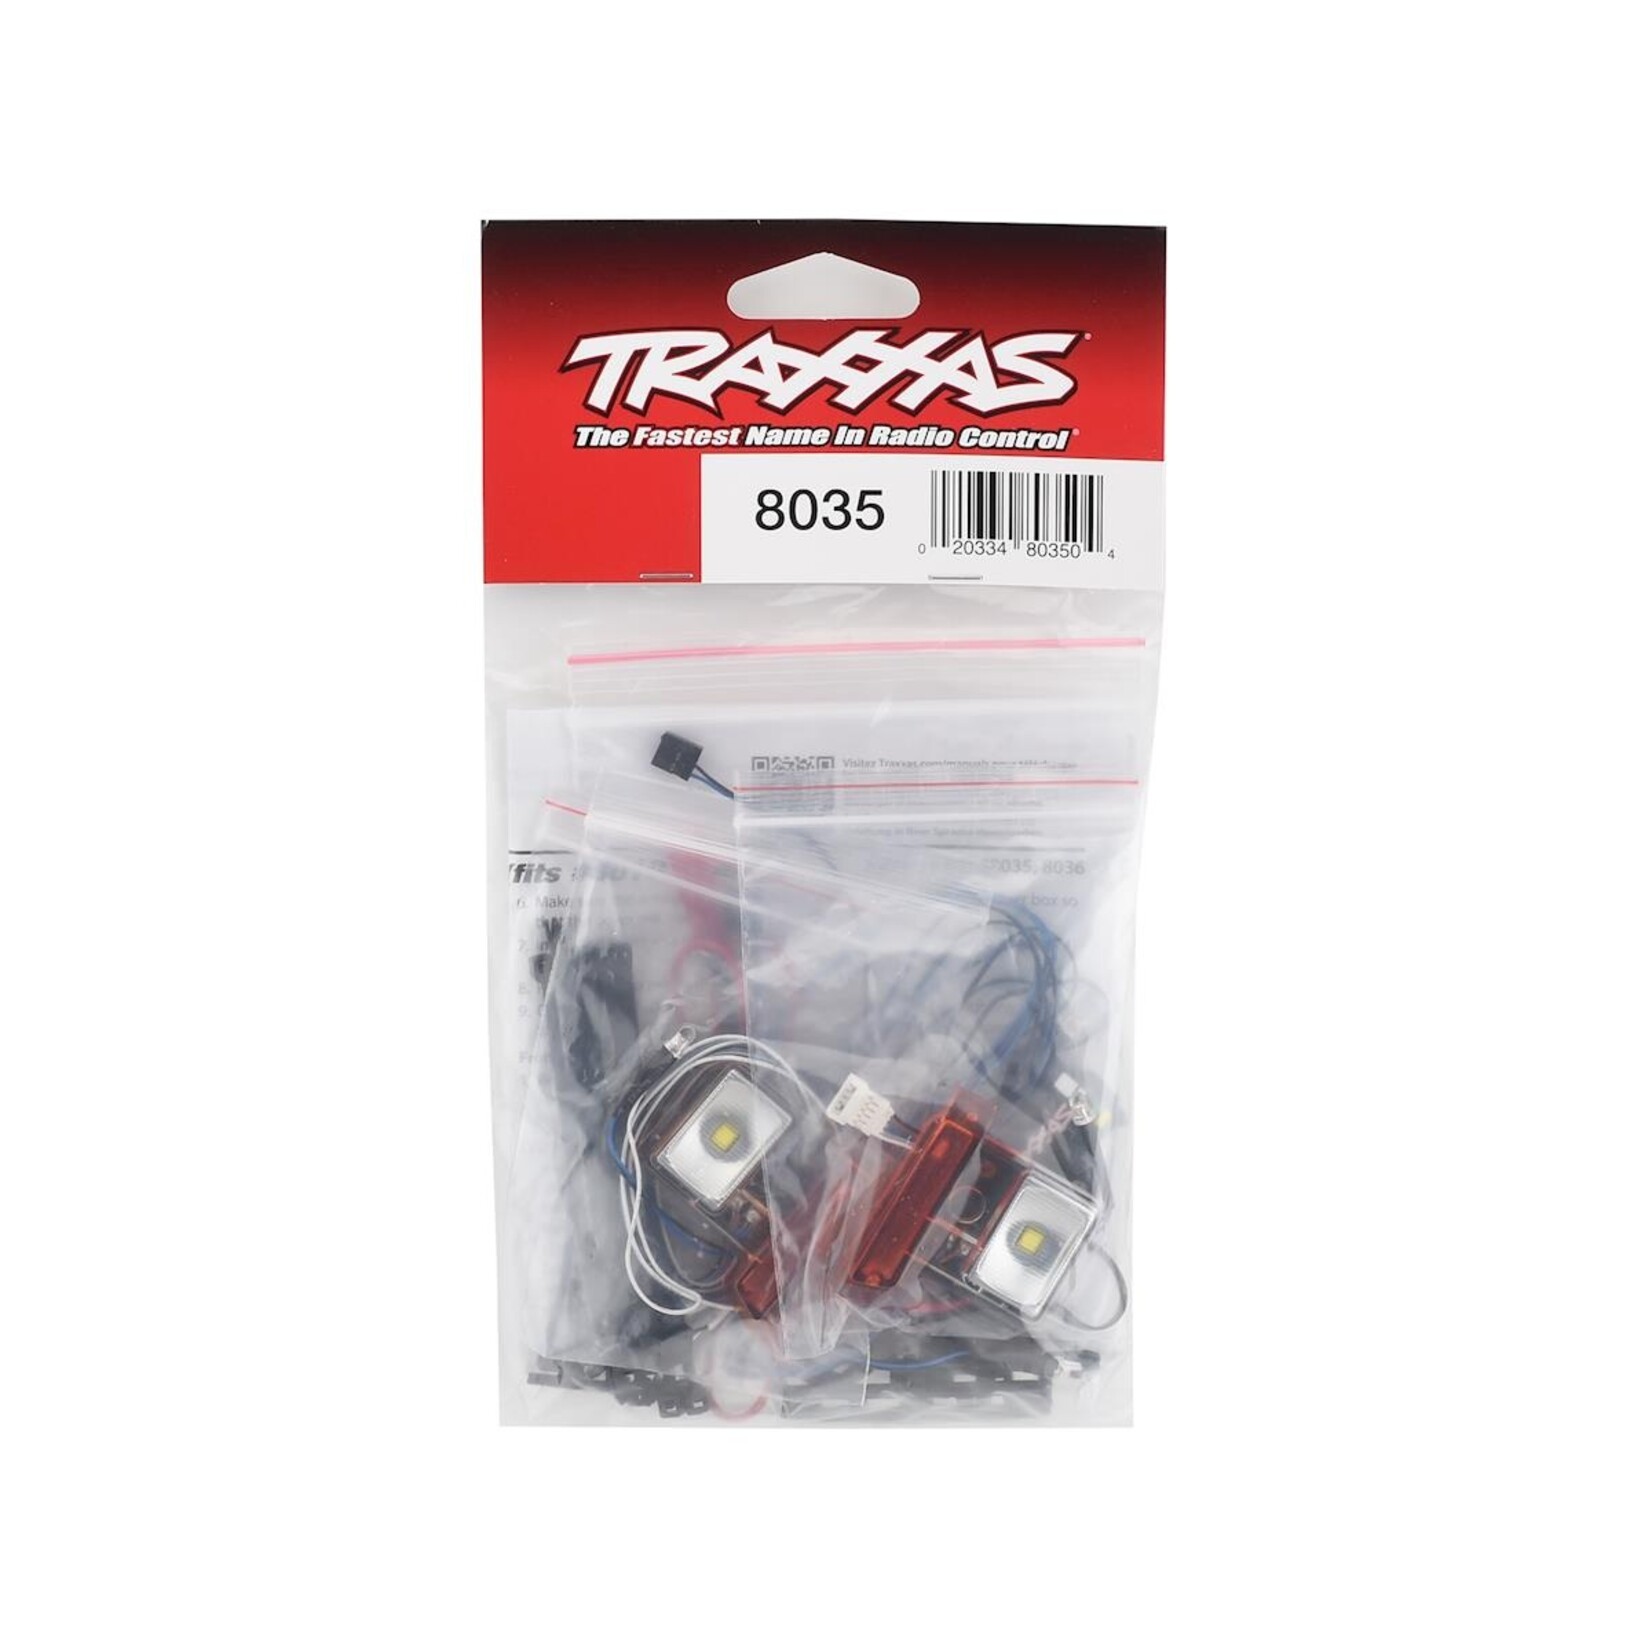 Traxxas Traxxas TRX-4 Ford Bronco Complete LED Light Set w/Power Supply #8035